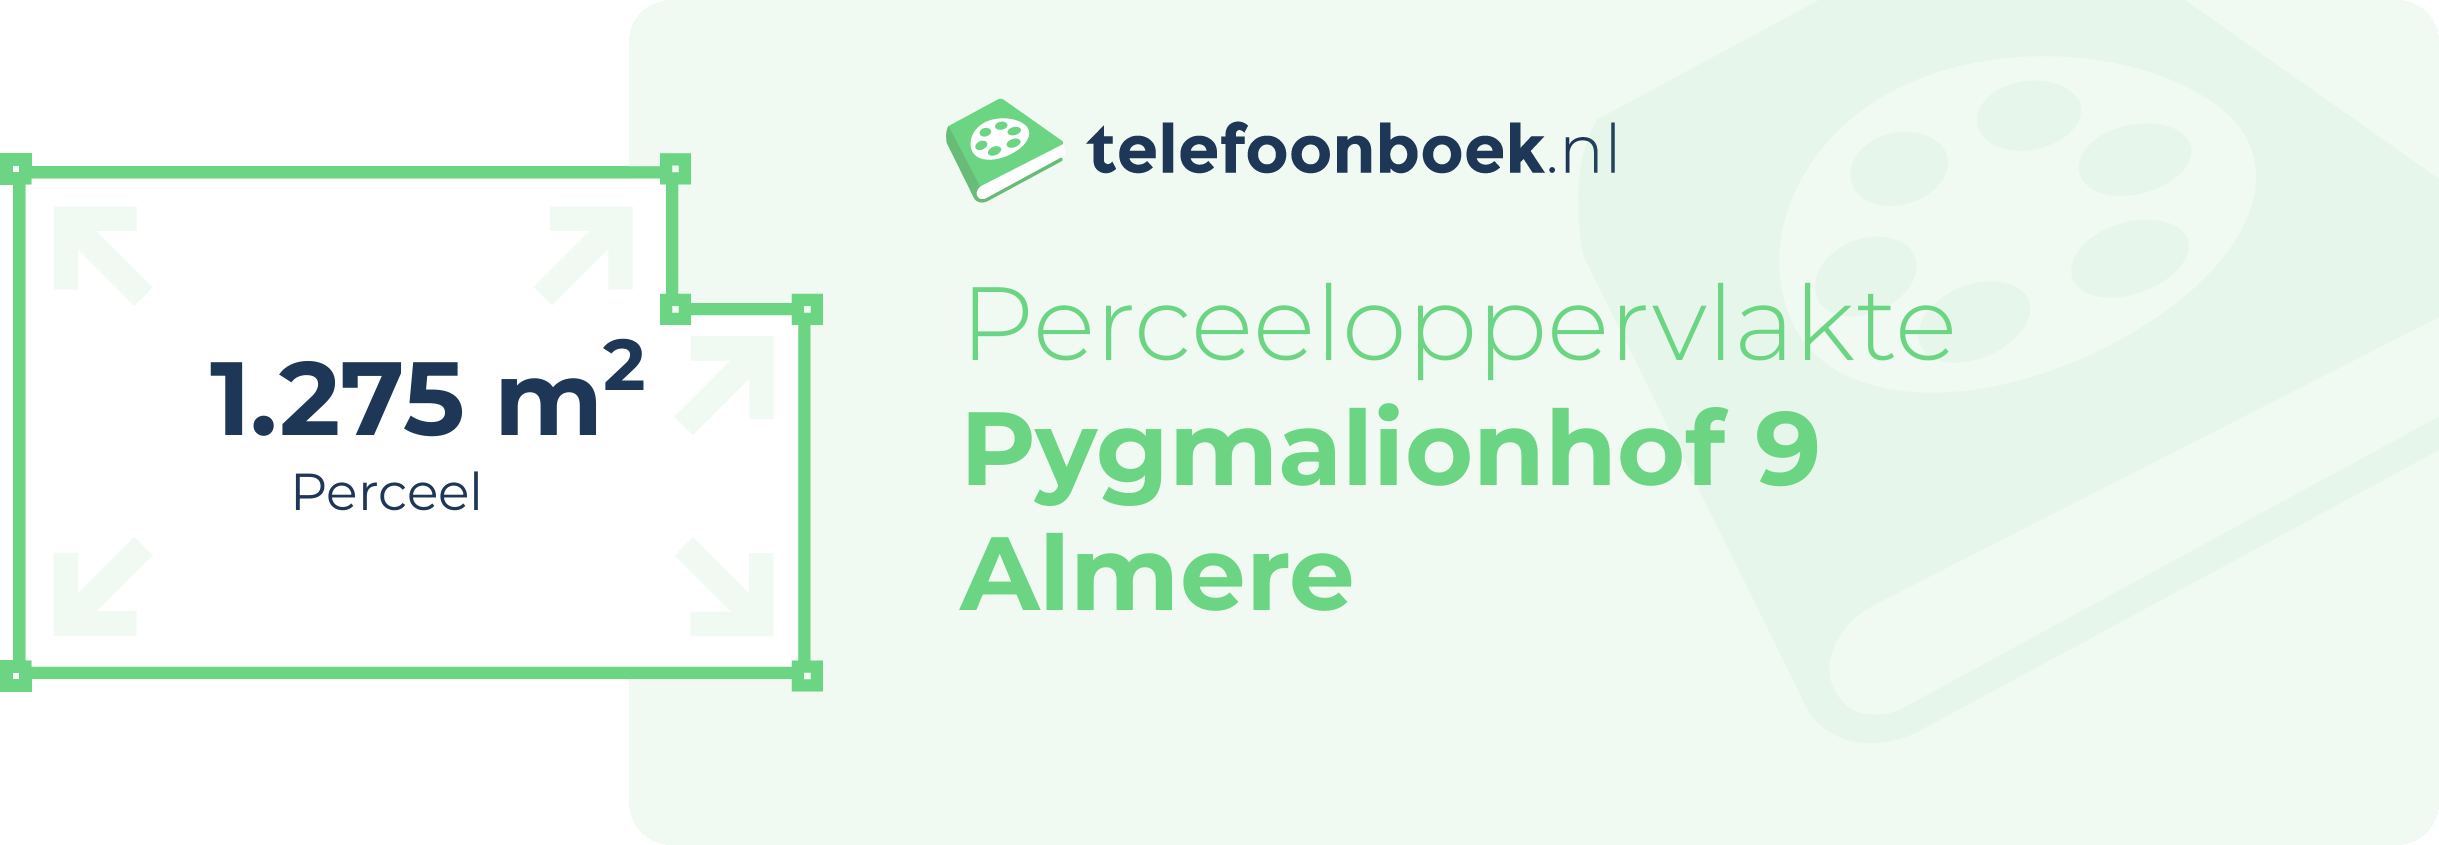 Perceeloppervlakte Pygmalionhof 9 Almere